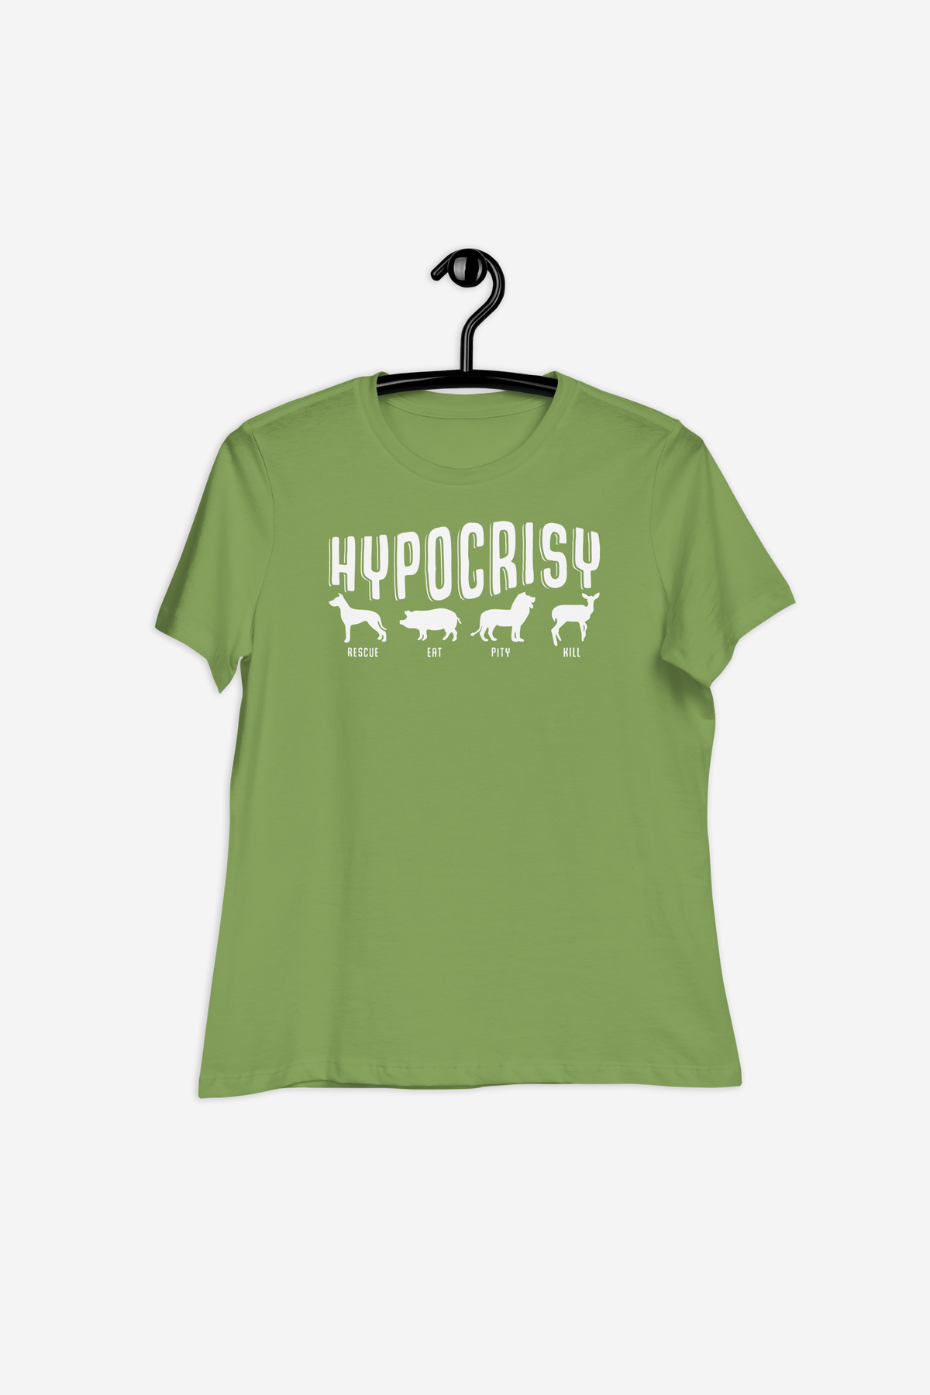 Hypocrisy Women's Relaxed T-Shirt